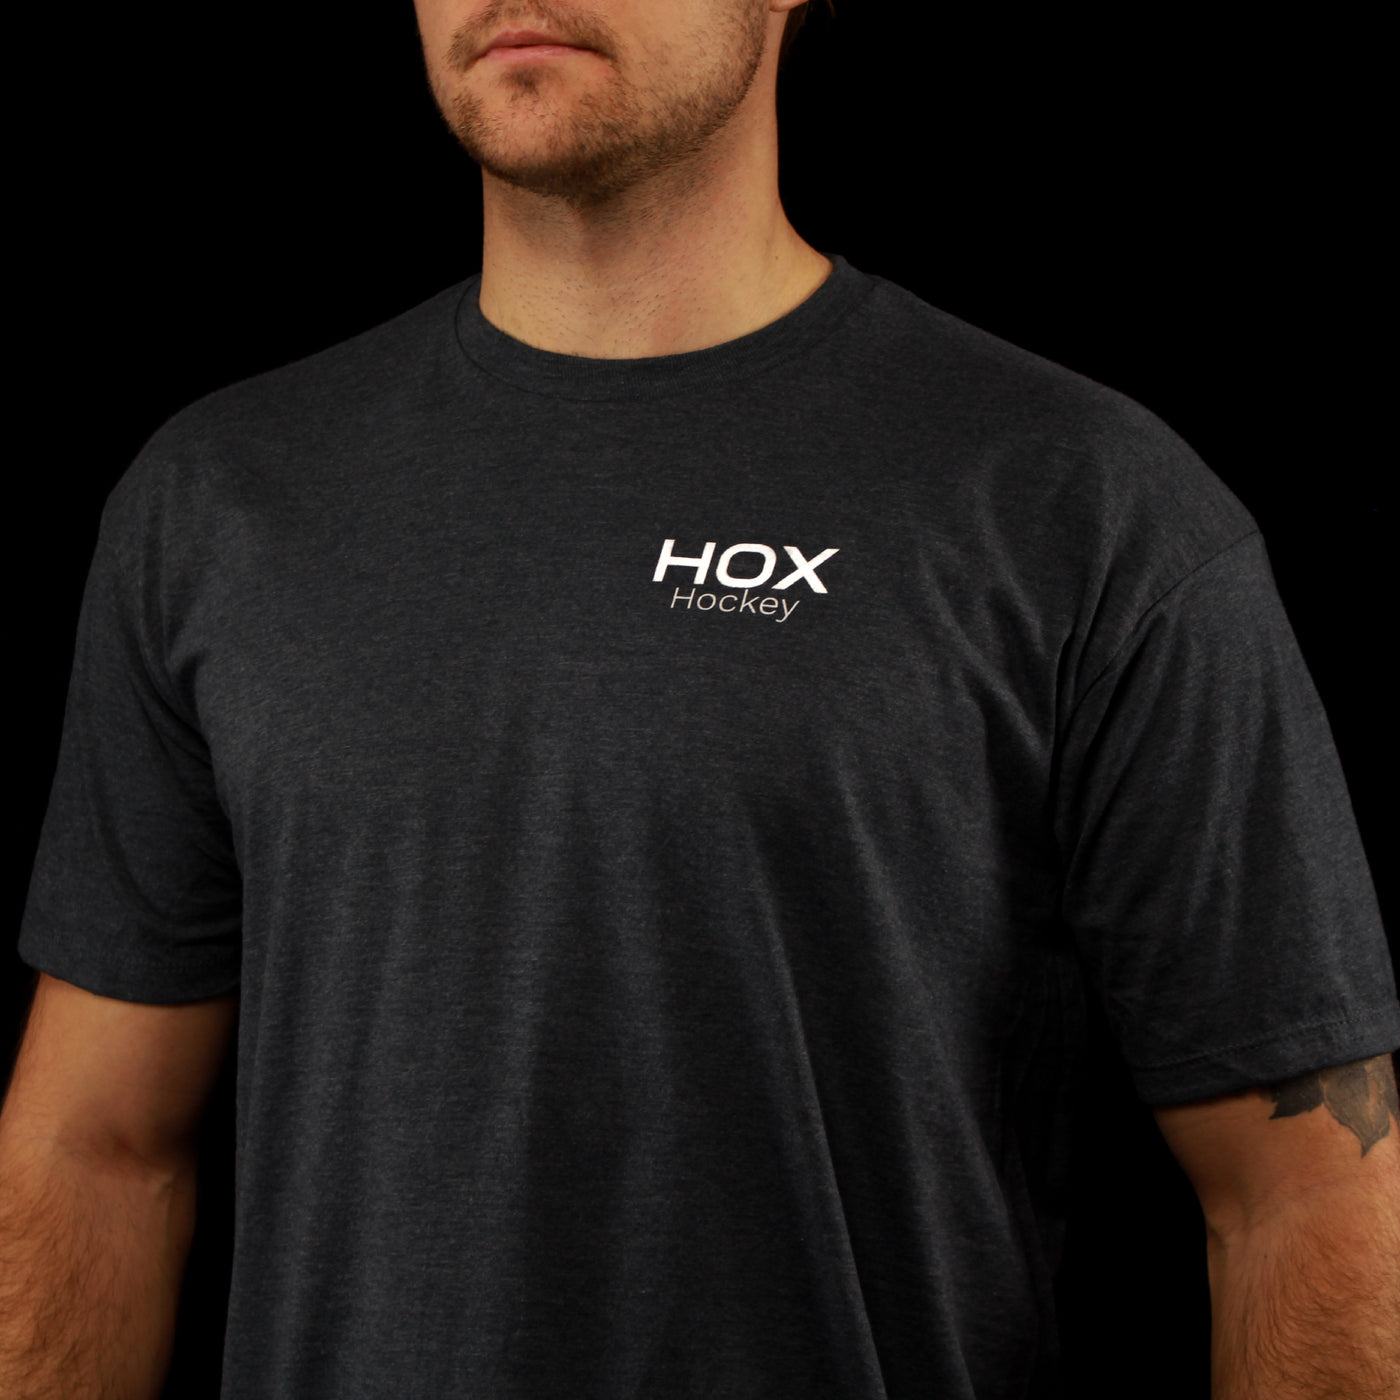 Shop T-Shirts | HOX Hockey